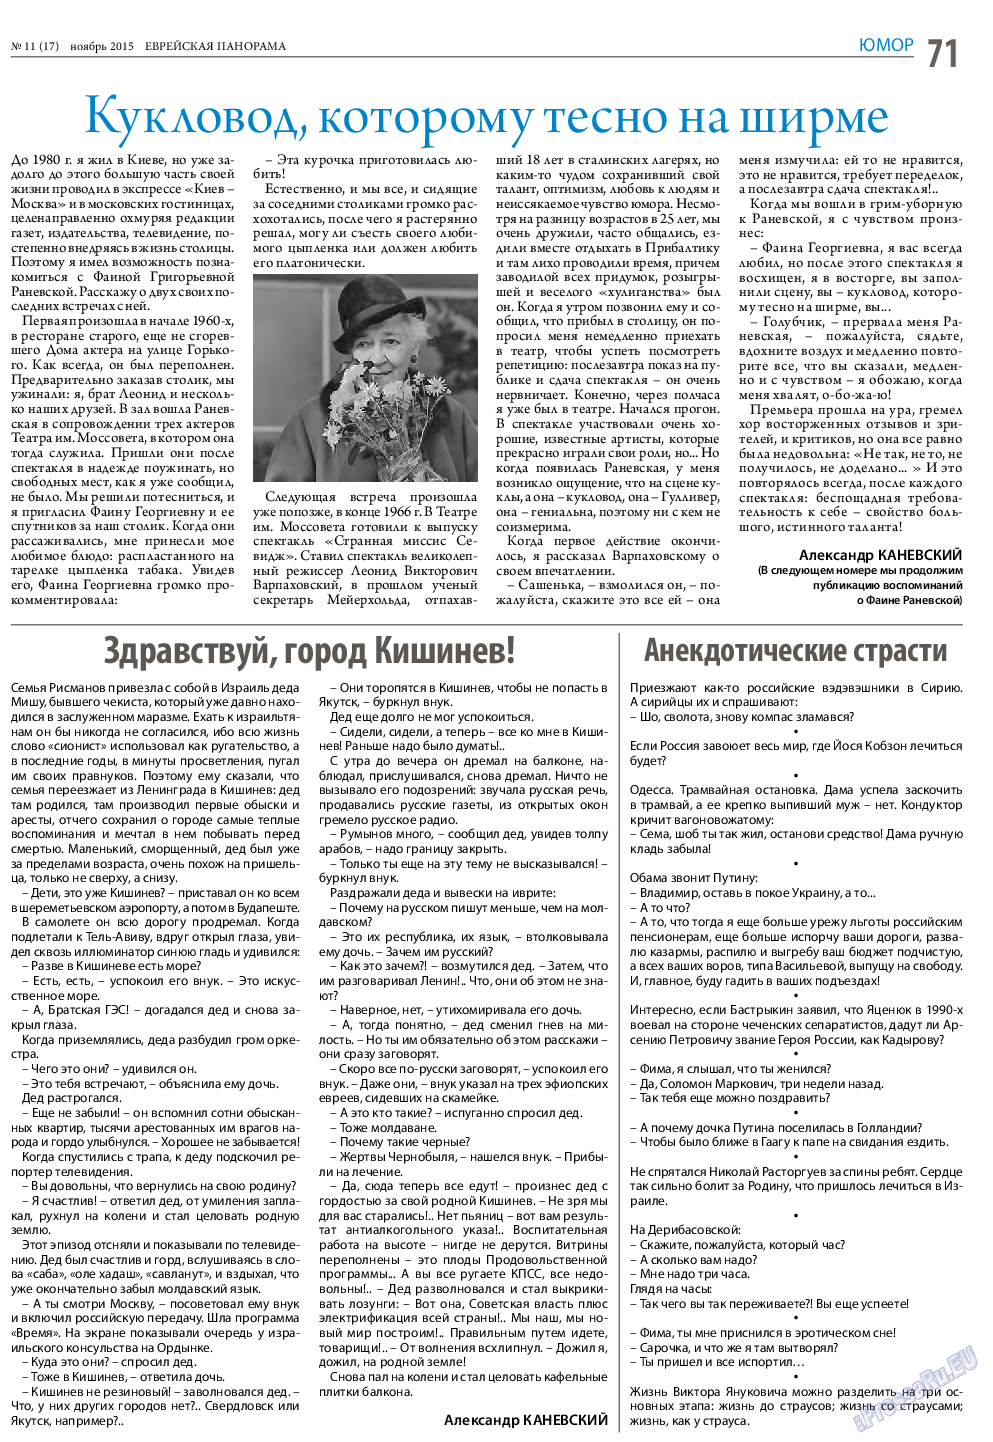 Еврейская панорама, газета. 2015 №11 стр.71